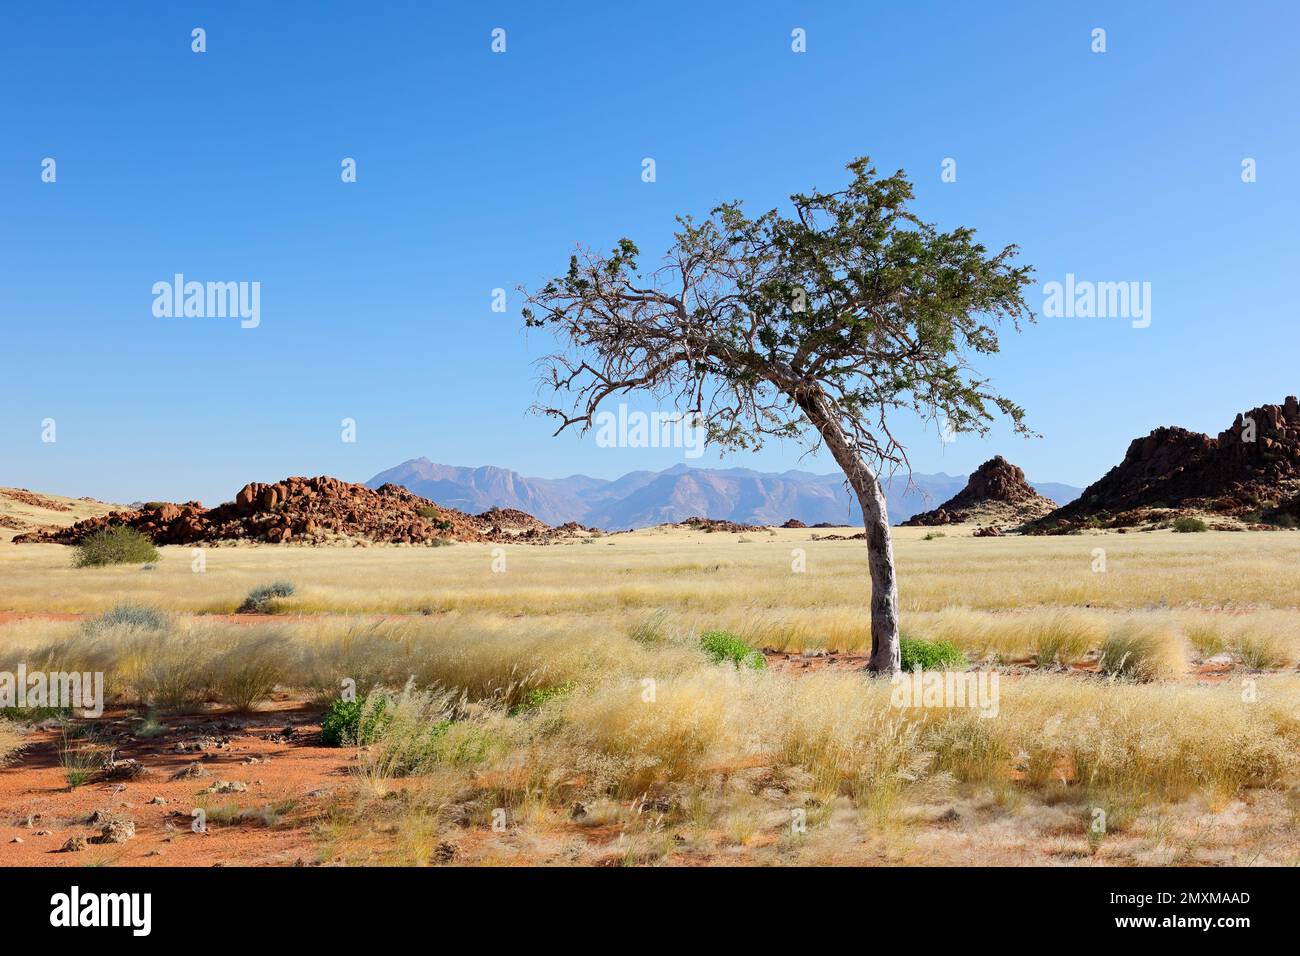 Un árbol de pastores africanos (Boscia alLjublunca) en pastizales áridos, montaña Brandberg, Namibia Foto de stock